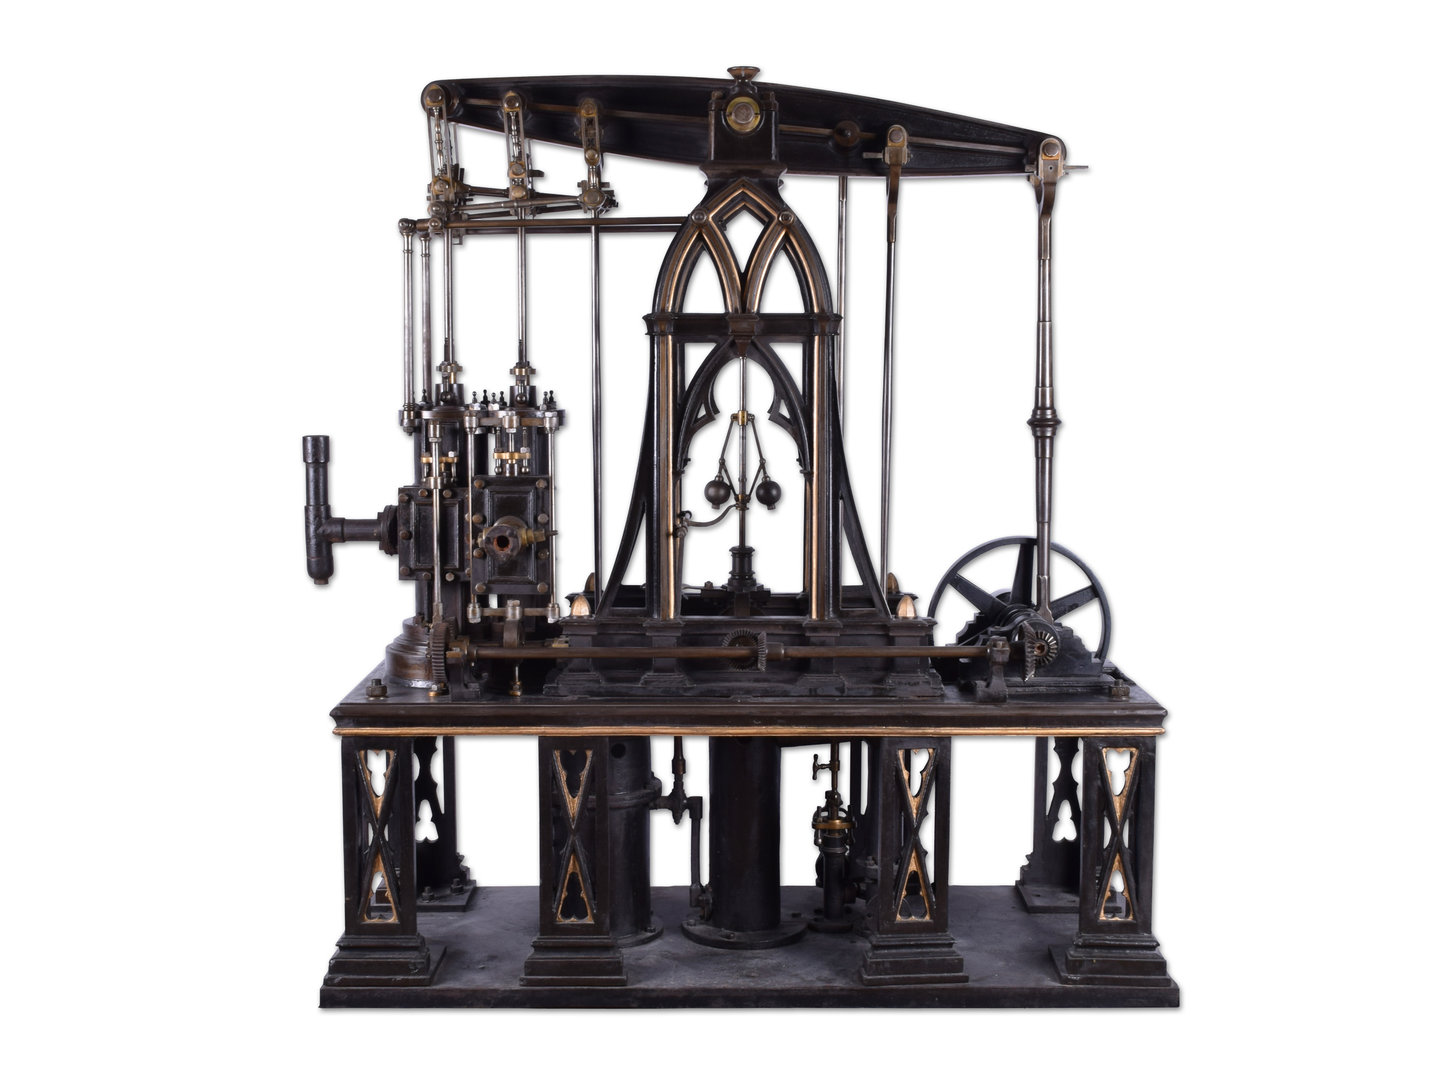 Compound balansstoommachine, ca. 1840